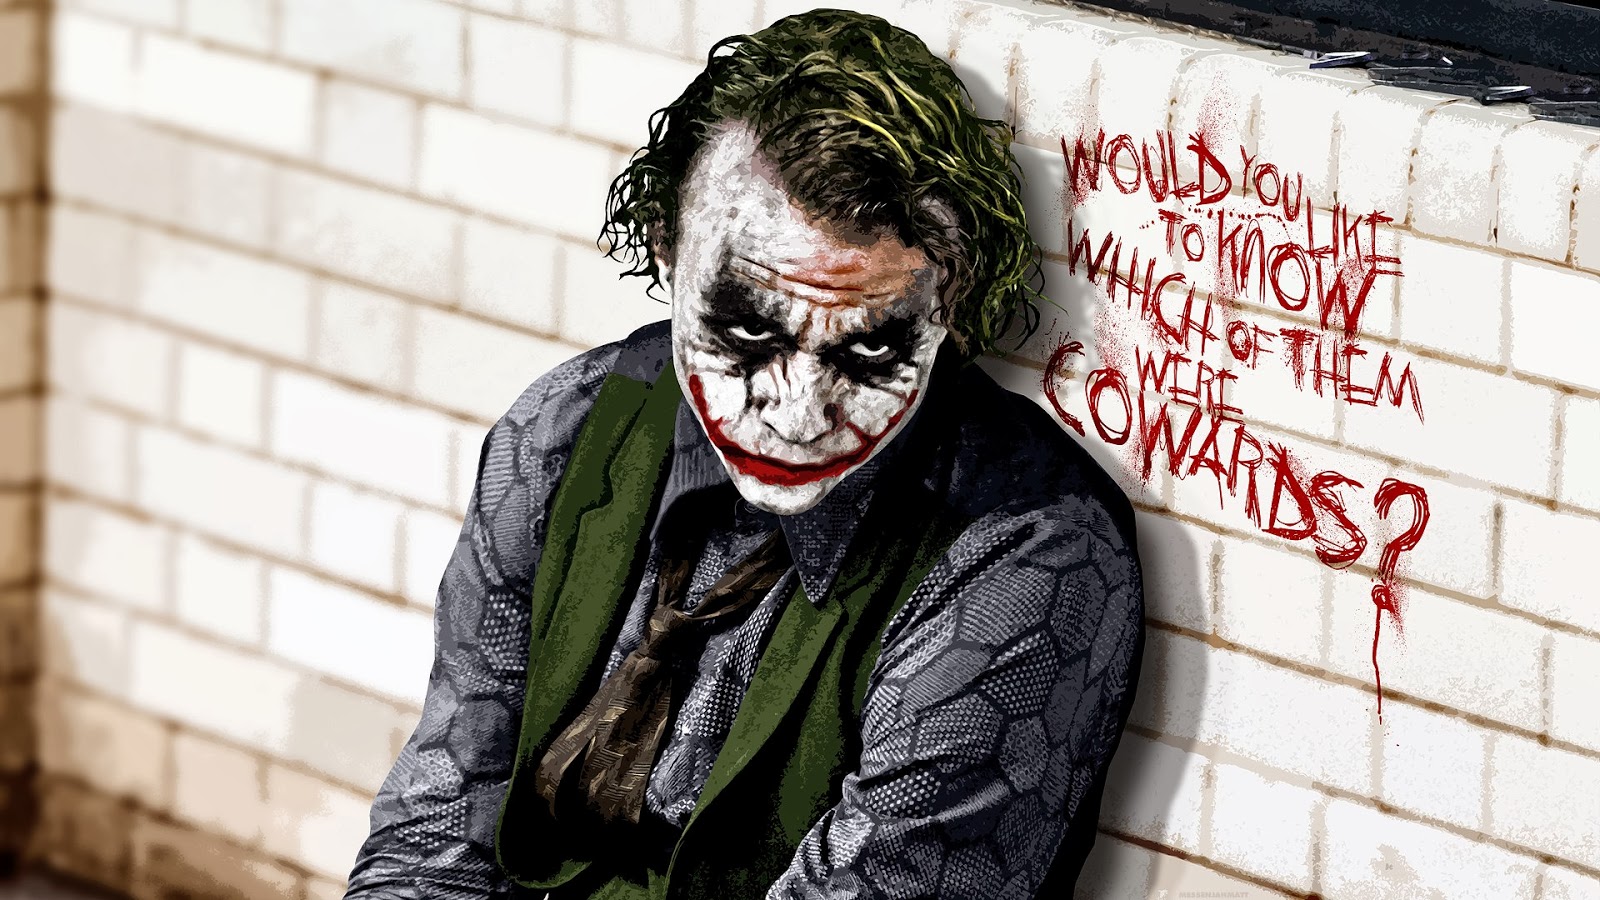 Technology India: The Joker - Heath Ledger HD Wallpapers1600 x 900